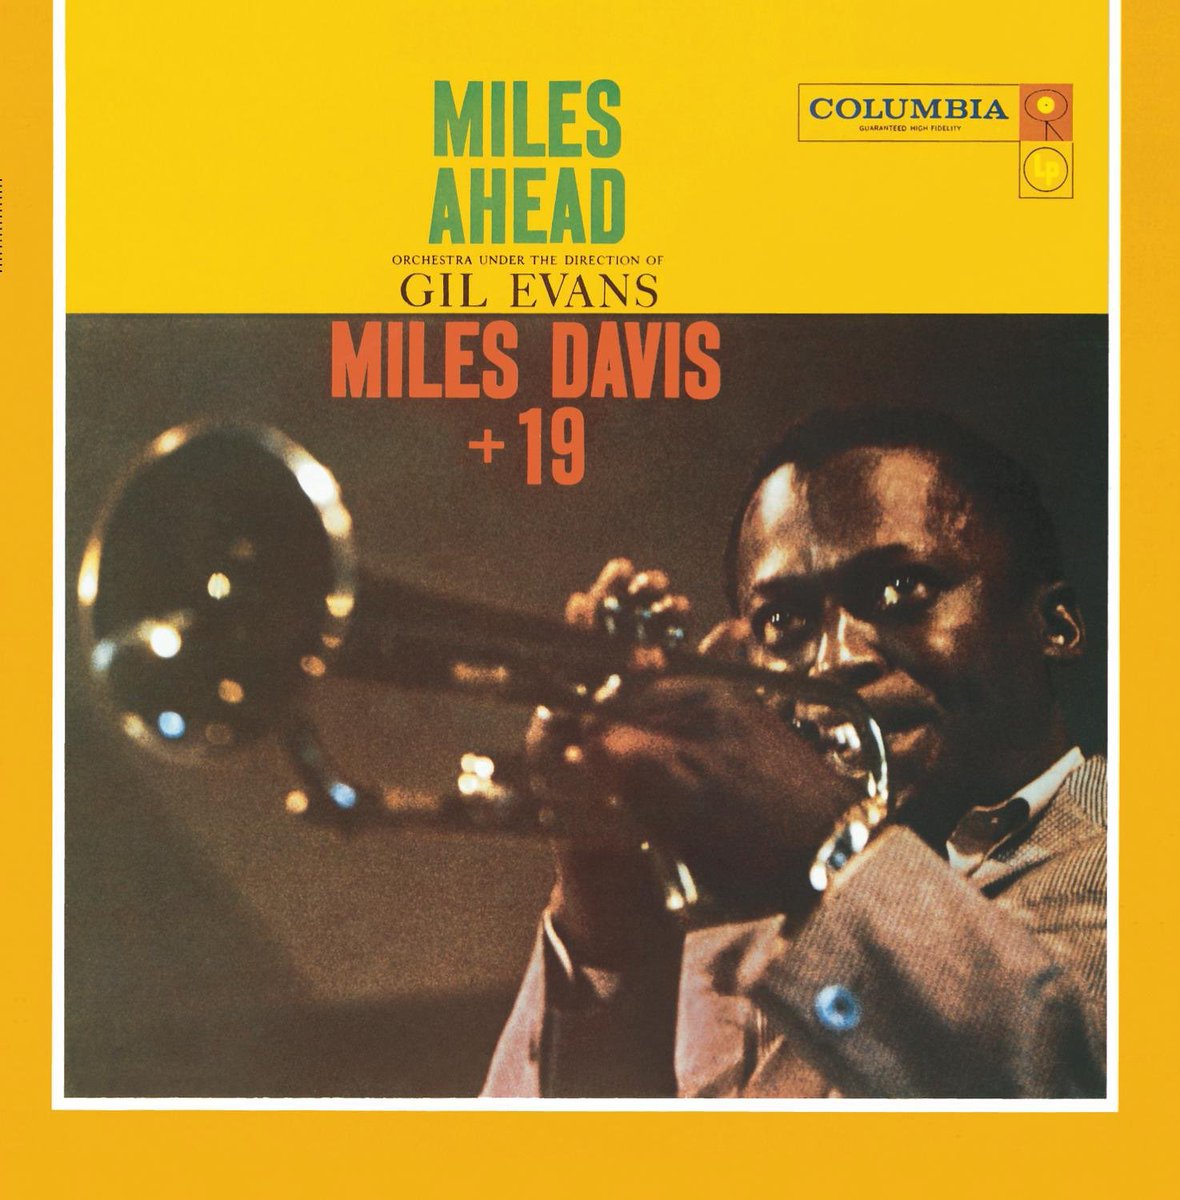  #NowPlaying "Miles Ahead" by Miles Davis on  @TIDAL  https://tidal.com/album/4990799 